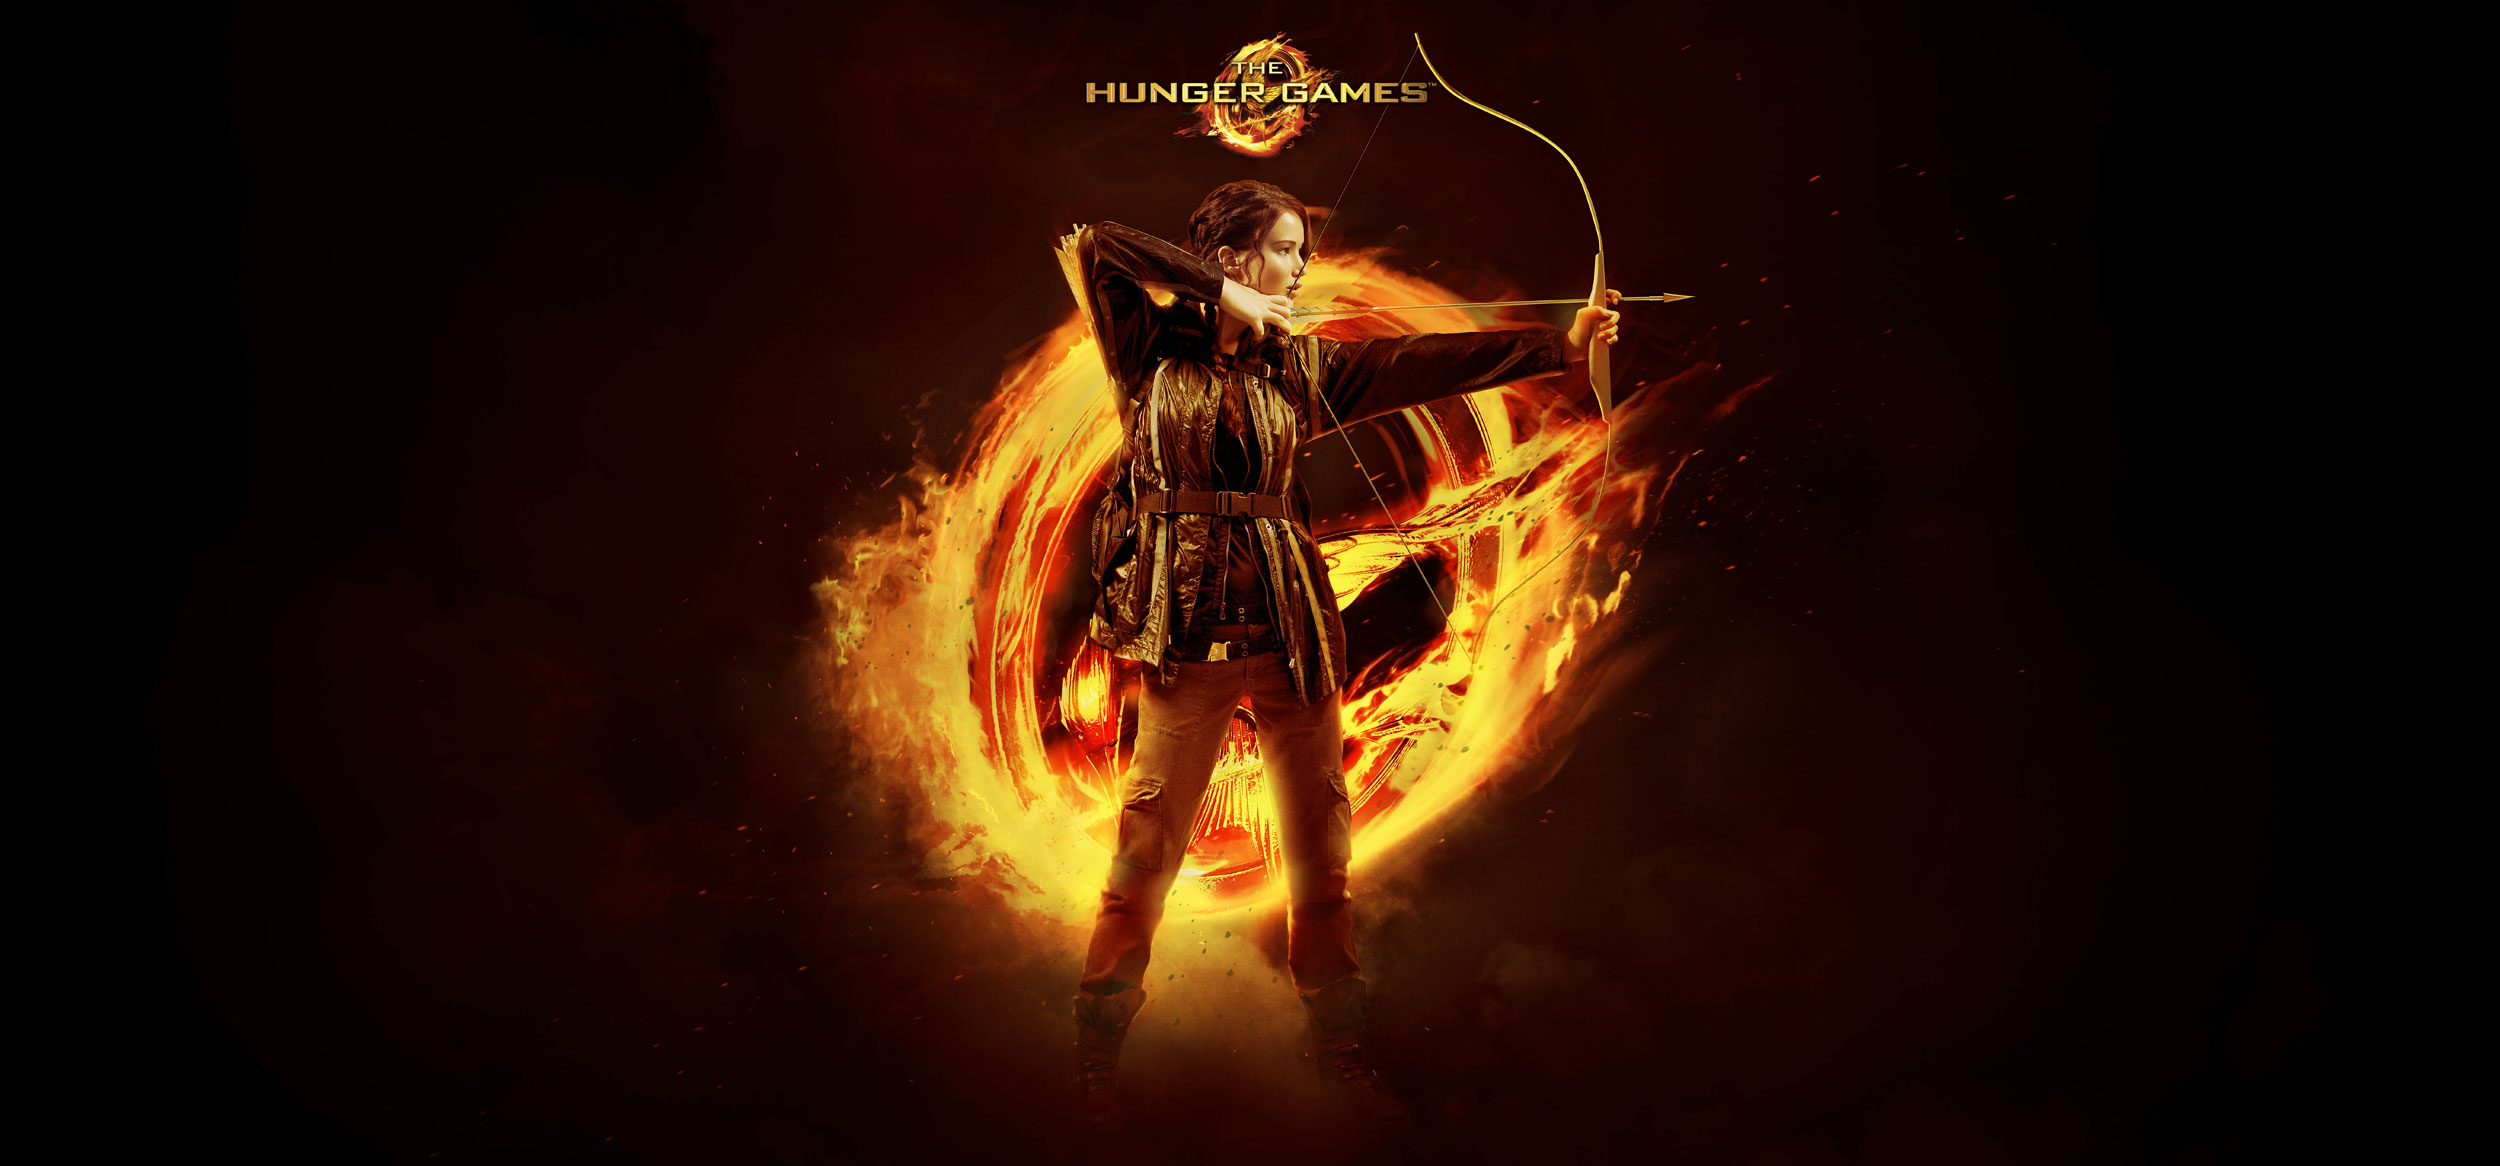 Hunger Games Header IMG